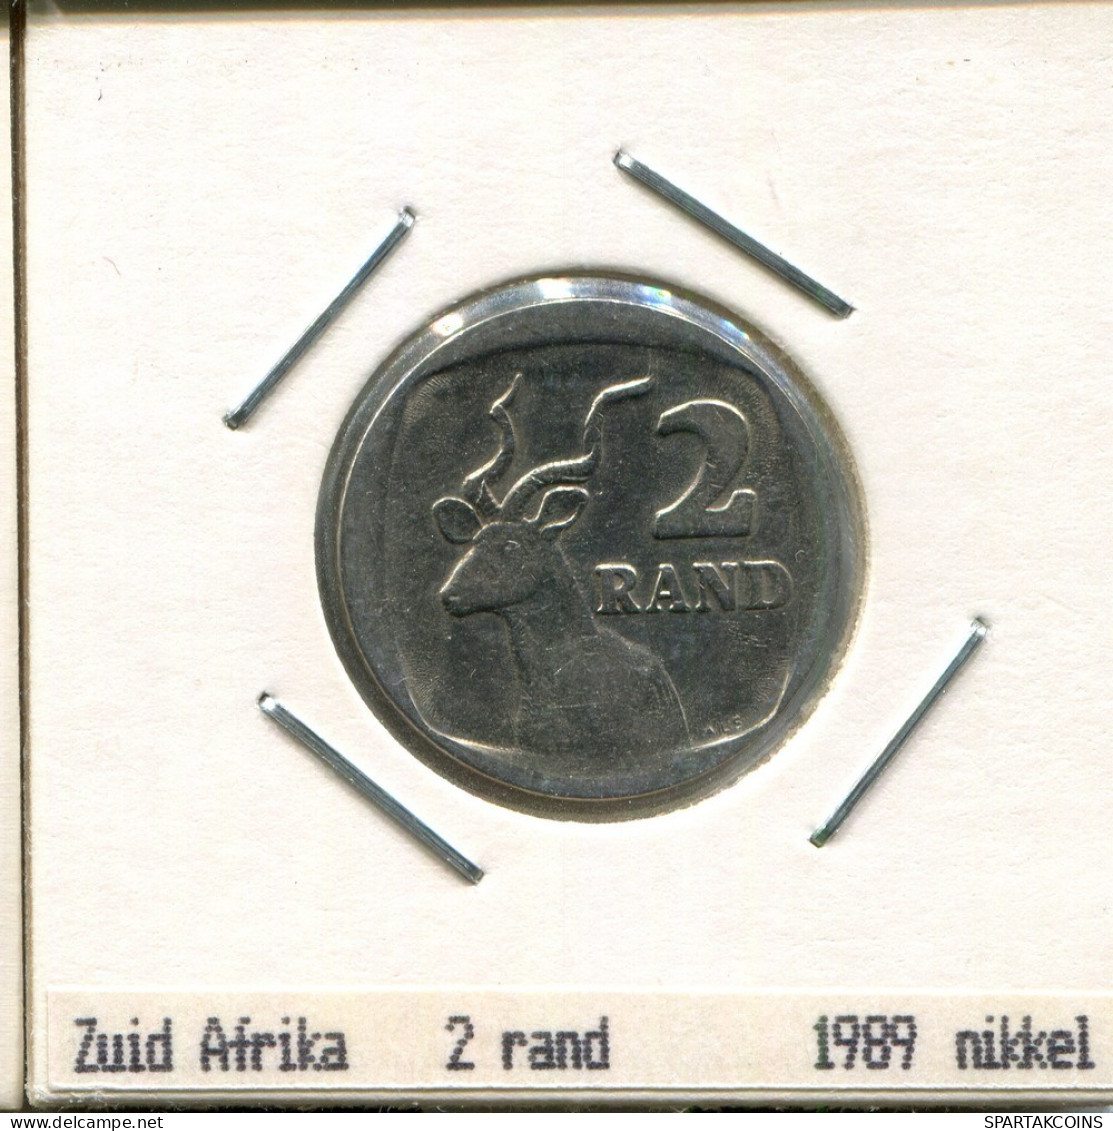 2 RAND 1989 SOUTH AFRICA Coin #AS289.U.A - Südafrika